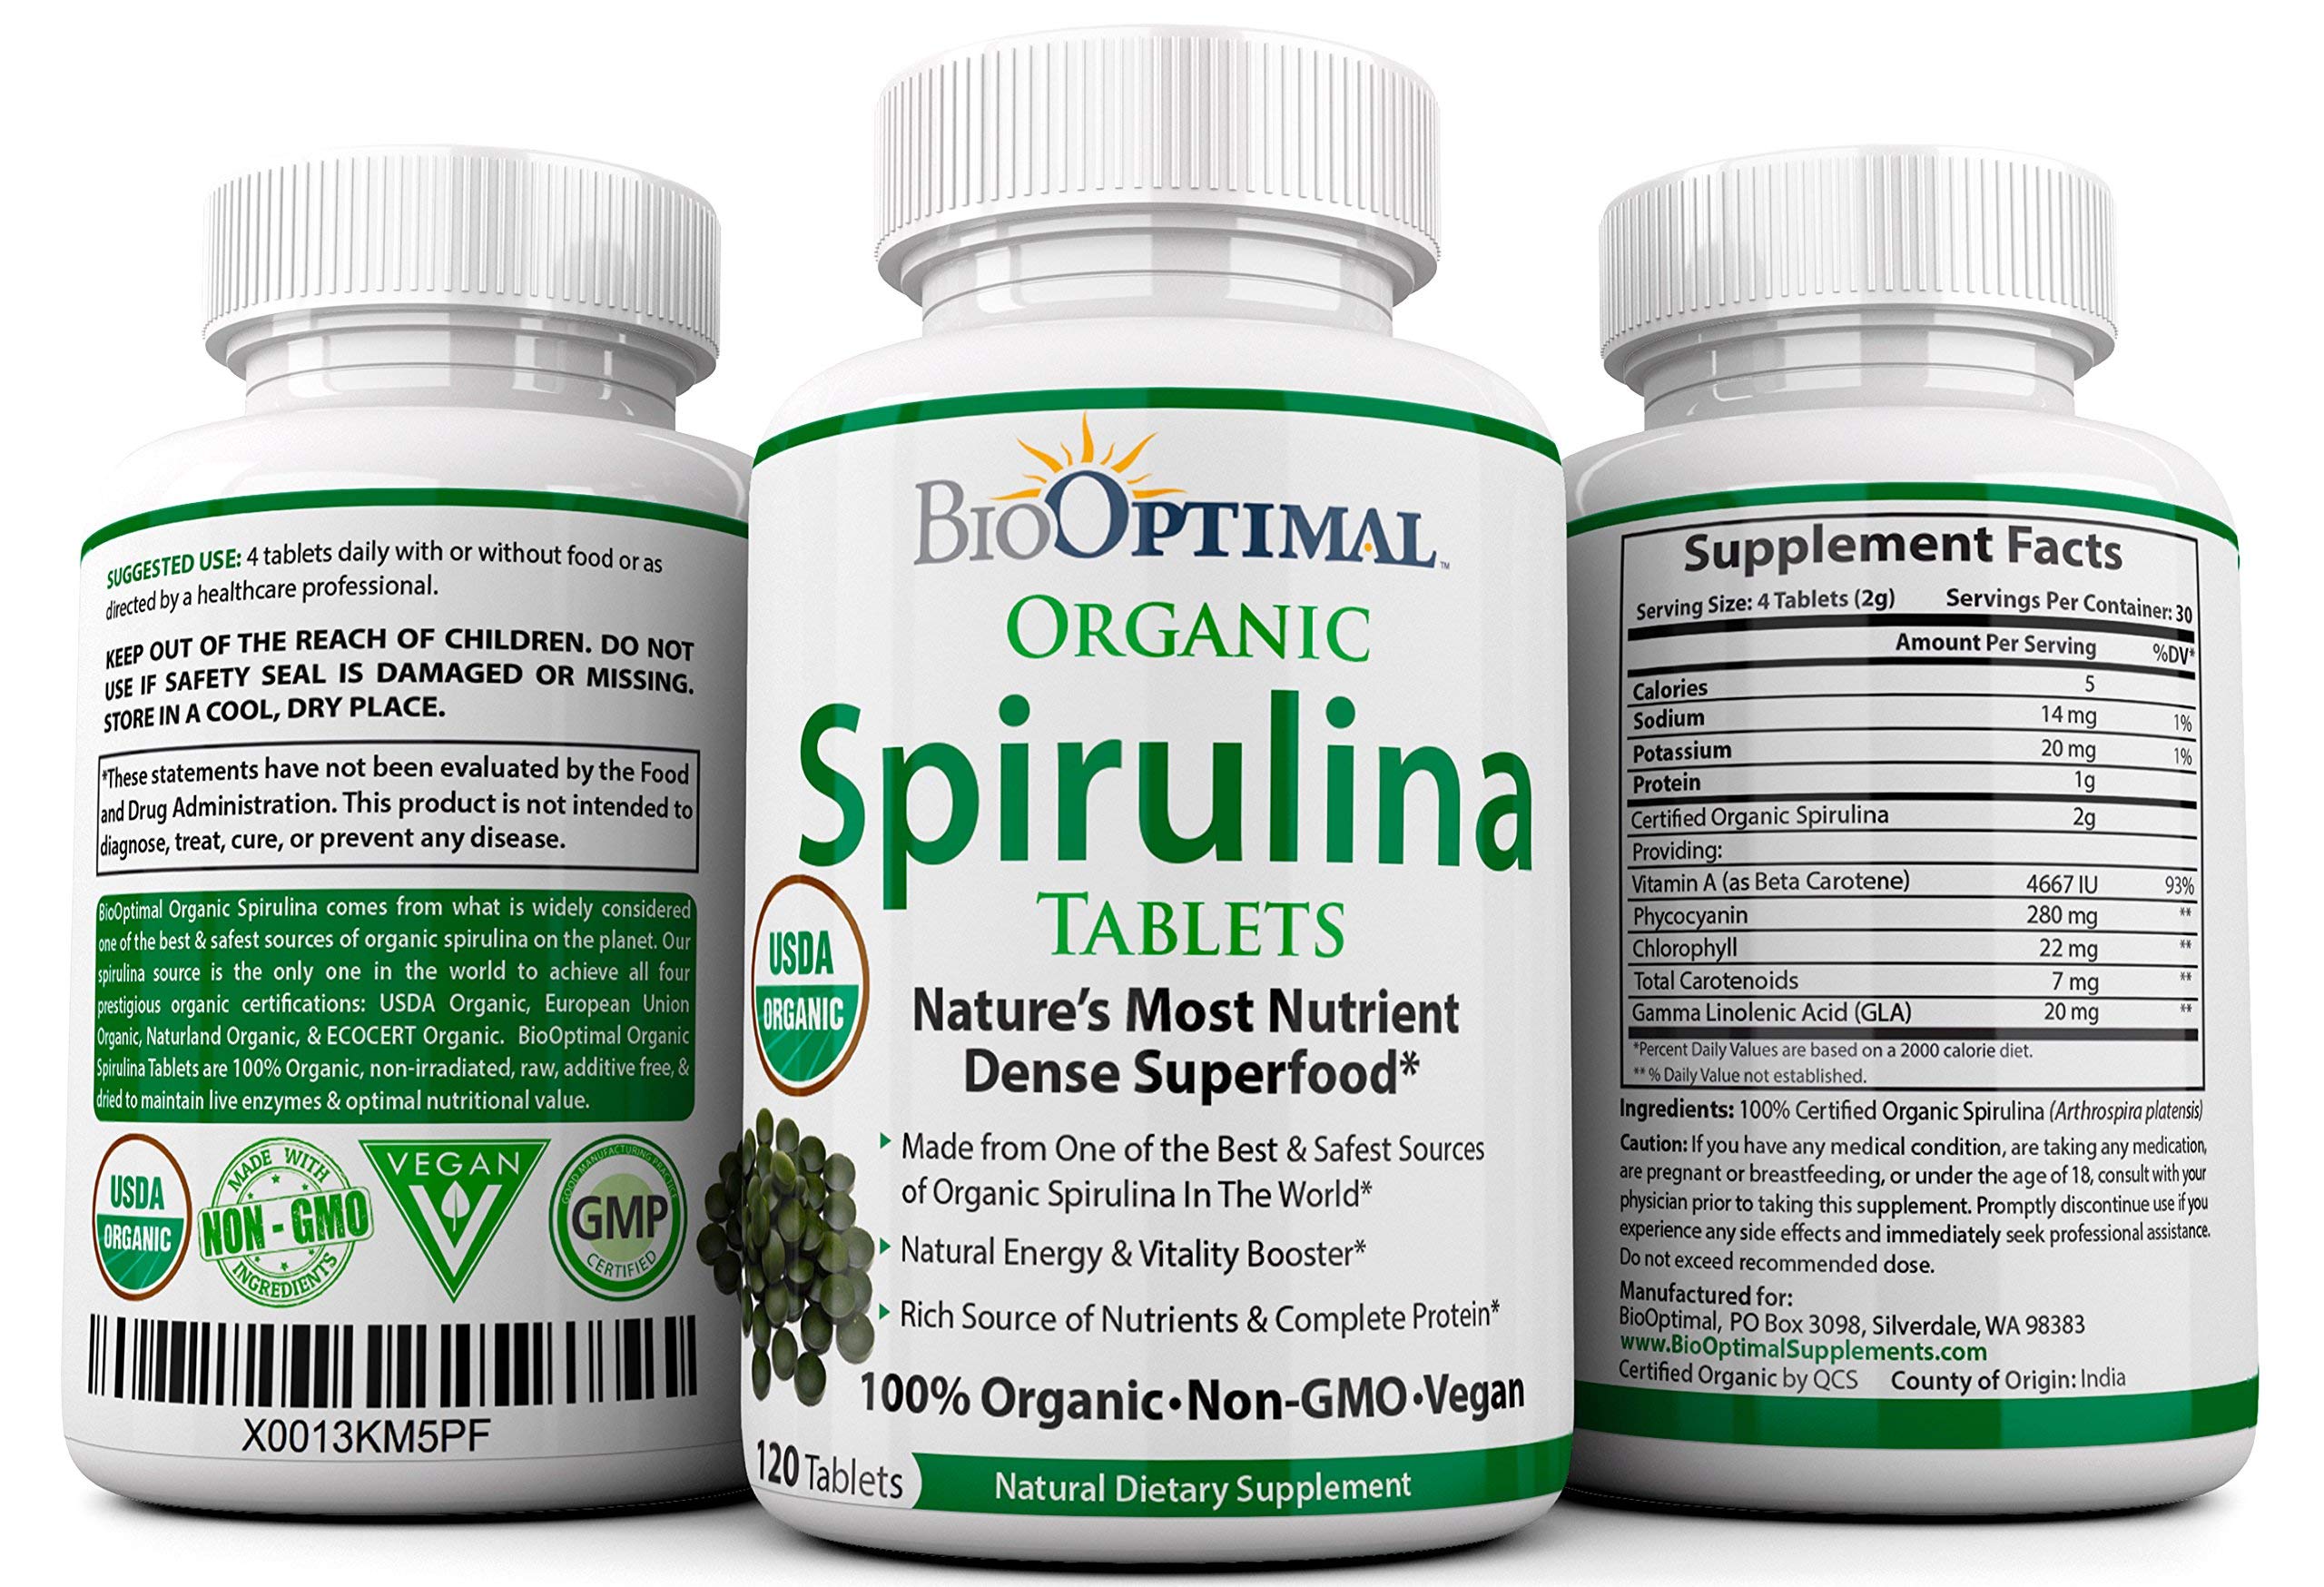 BioOptimal Chlorella Spirulina - Bundle - Organic Chorella Tablets & Organic Spirulina Tablets, 120 Count Each, Premium Quality 4 Organic Certifications